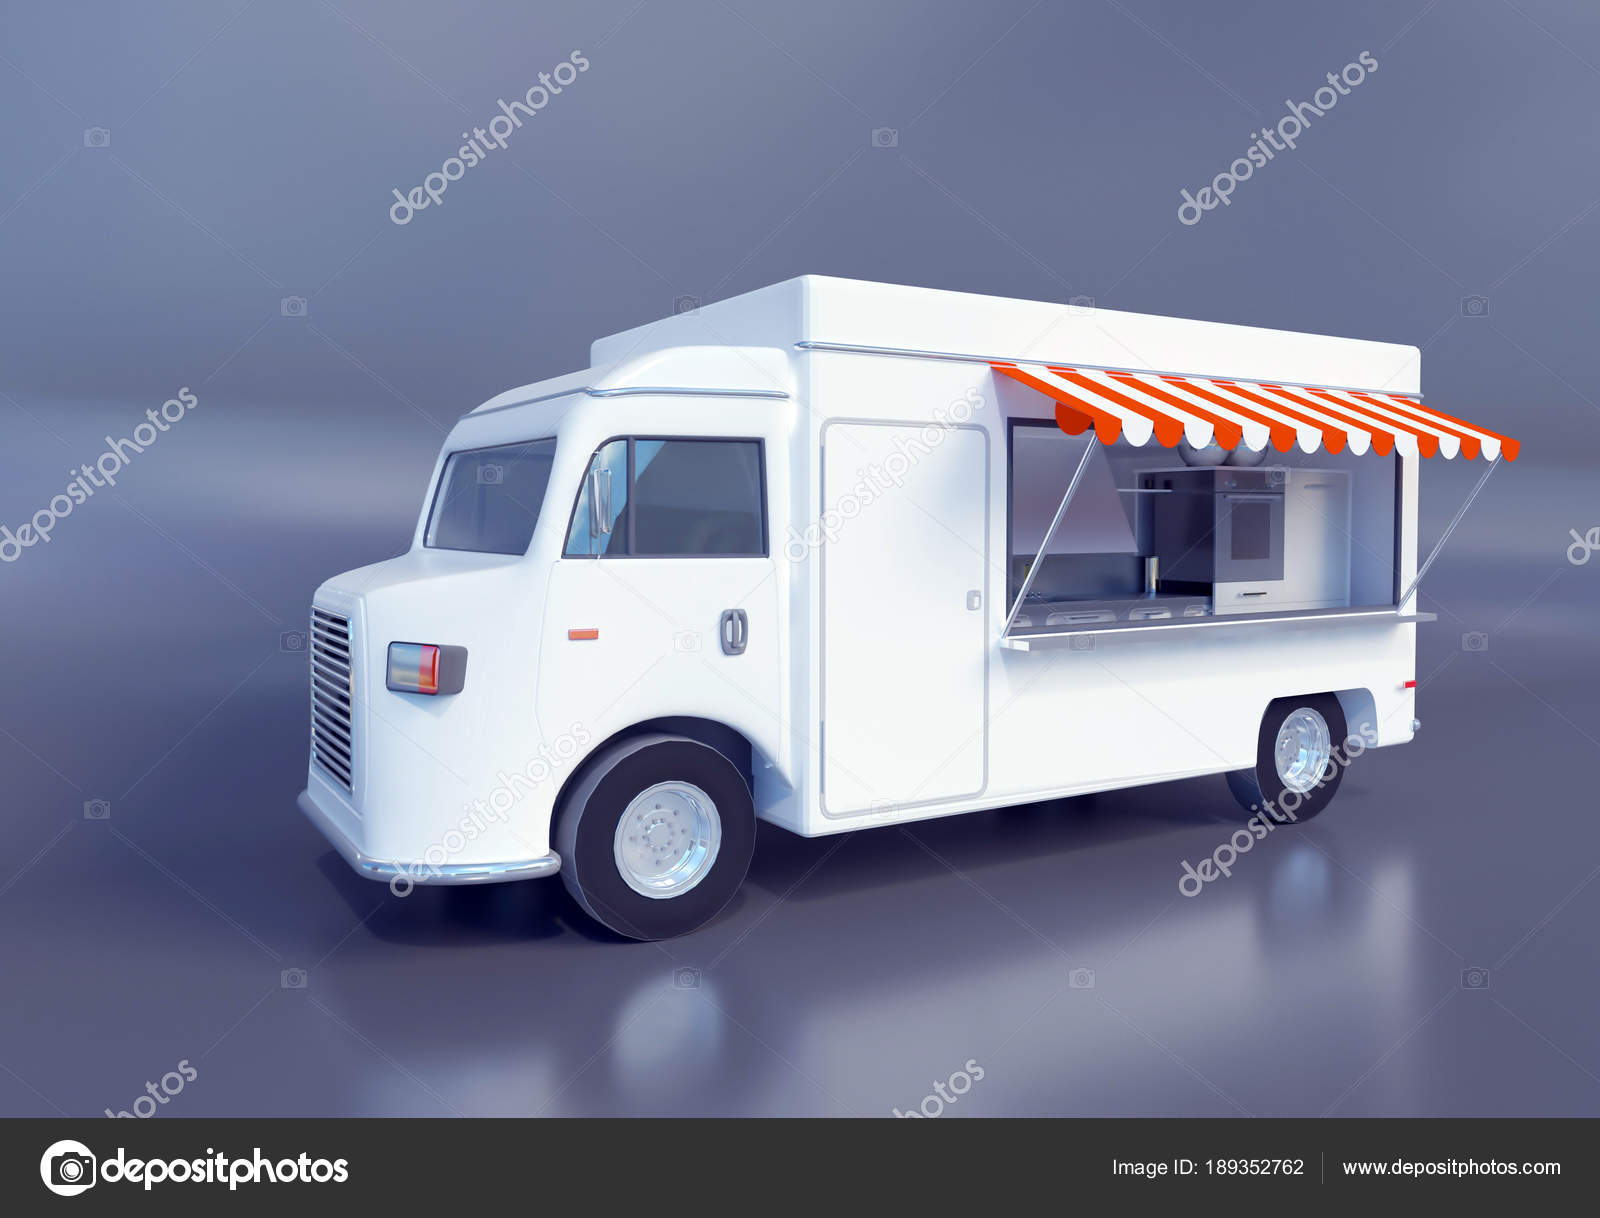 https://st3.depositphotos.com/15357672/18935/i/1600/depositphotos_189352762-stock-photo-3d-illustration-of-food-truck.jpg